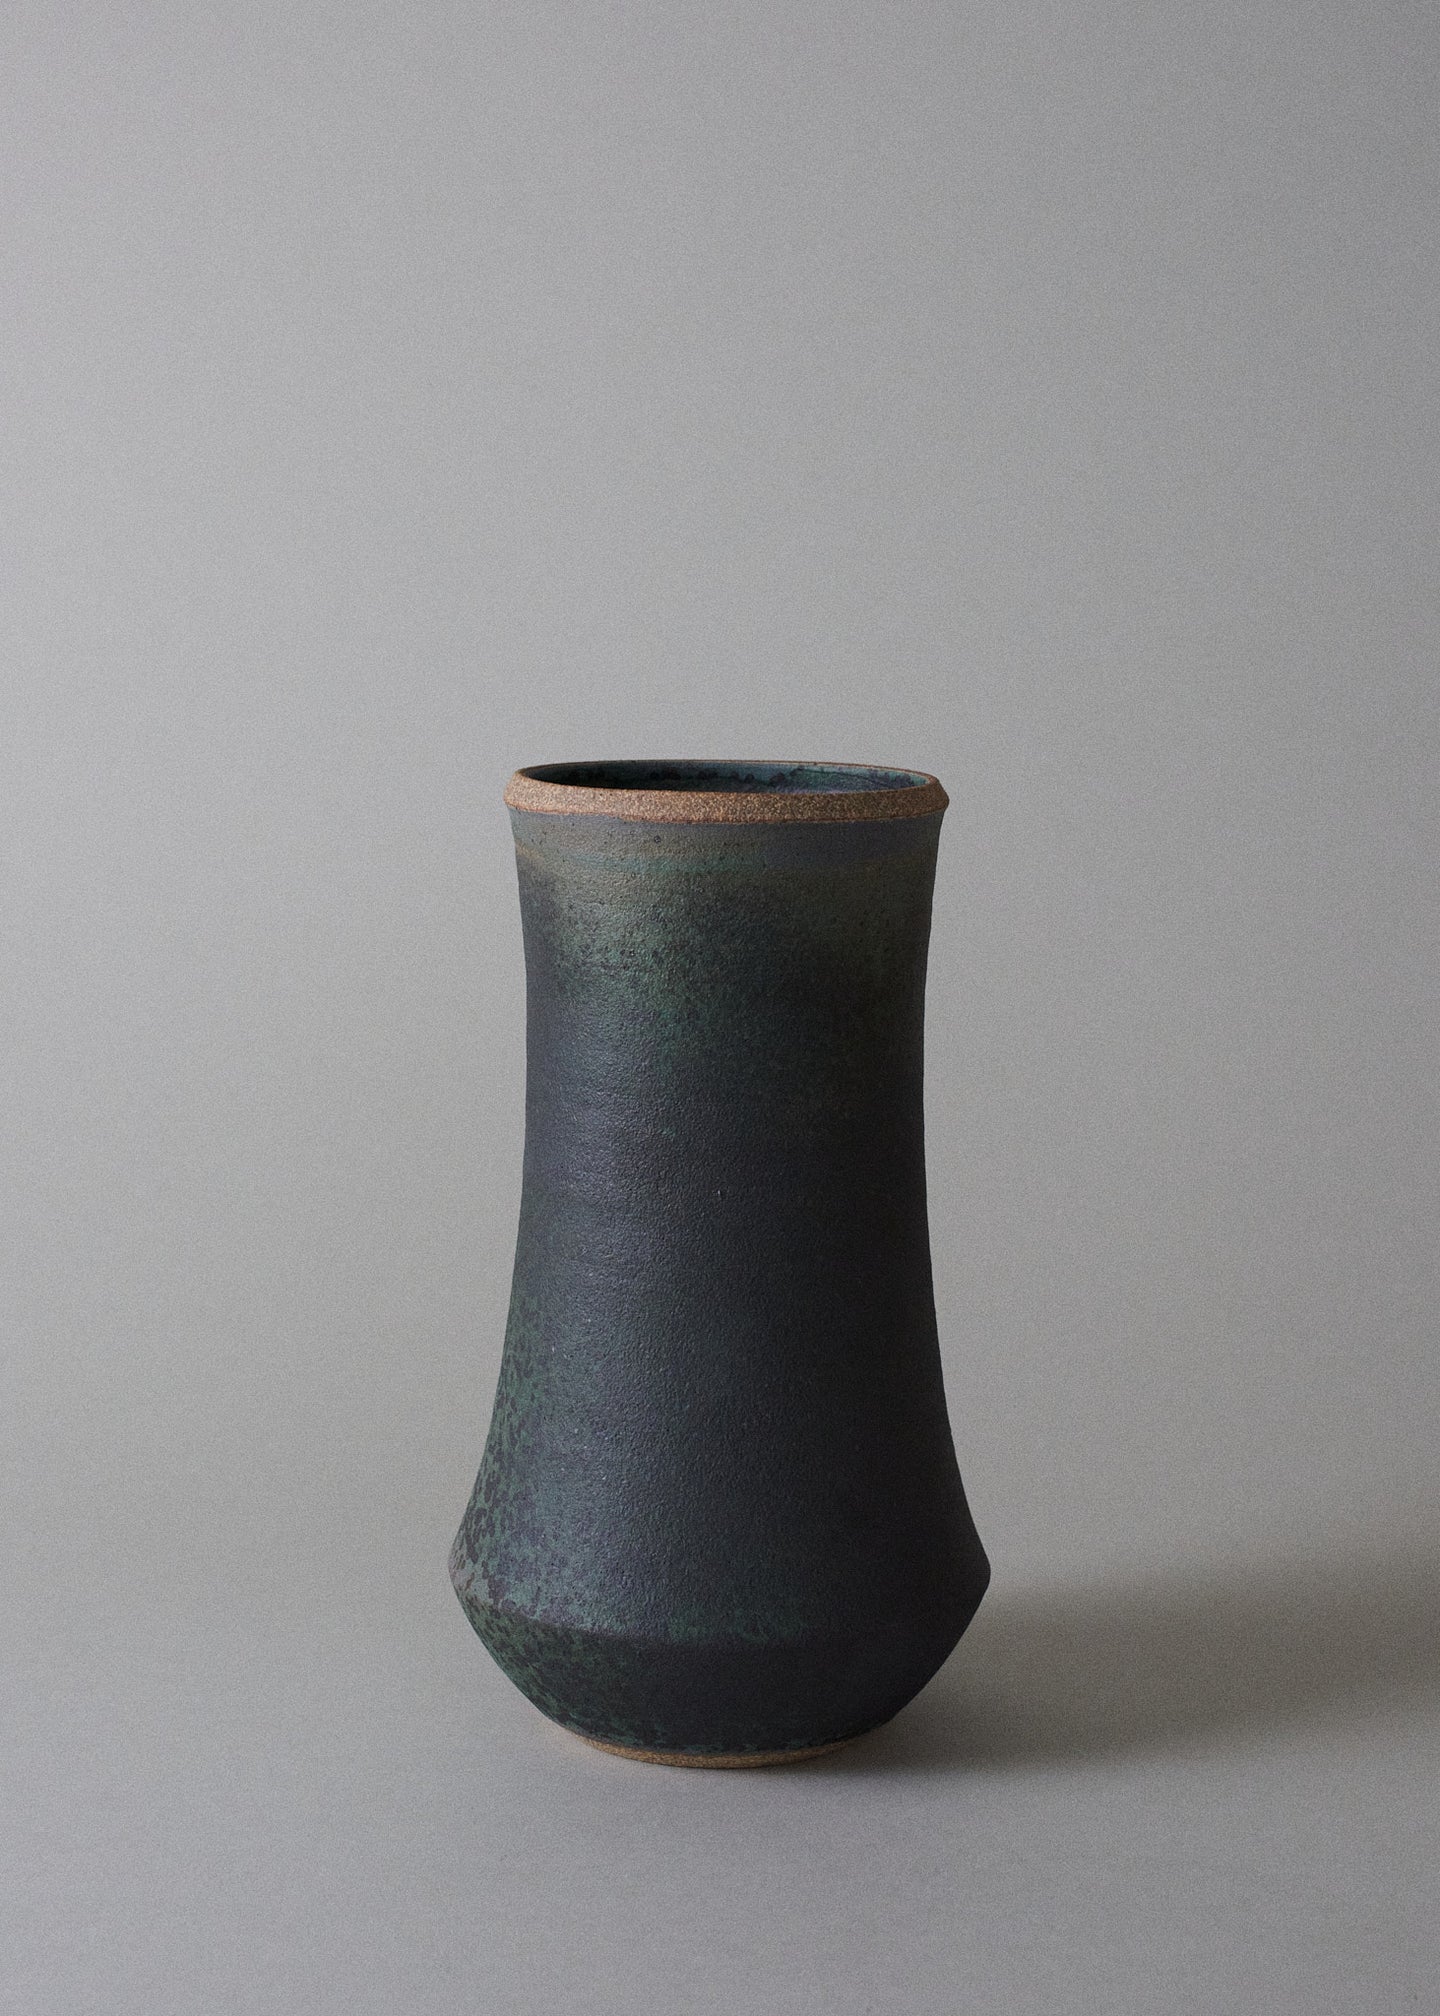 Artemis Vase in Lichen - Victoria Morris Pottery